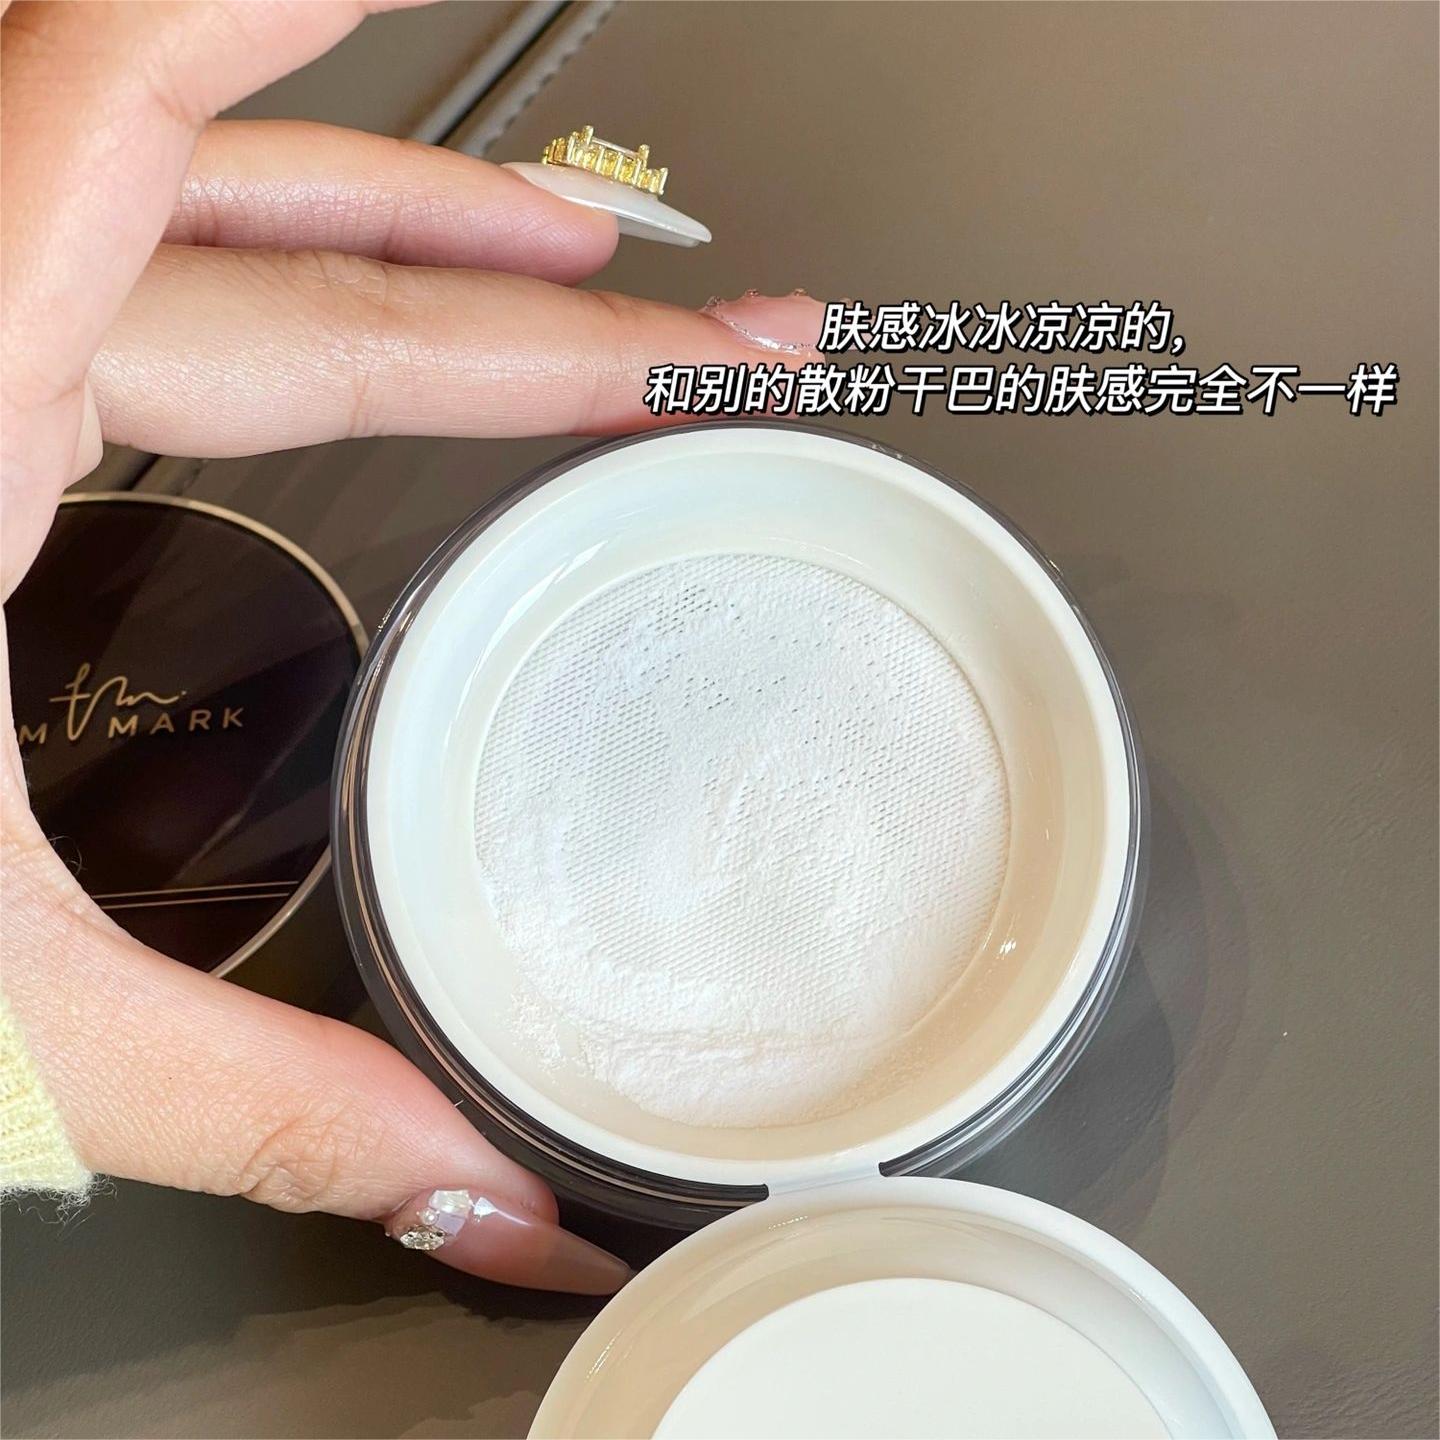 TomMark Magic Hydrating Loose Powder 8.5g 唐魅可魔法水润散粉